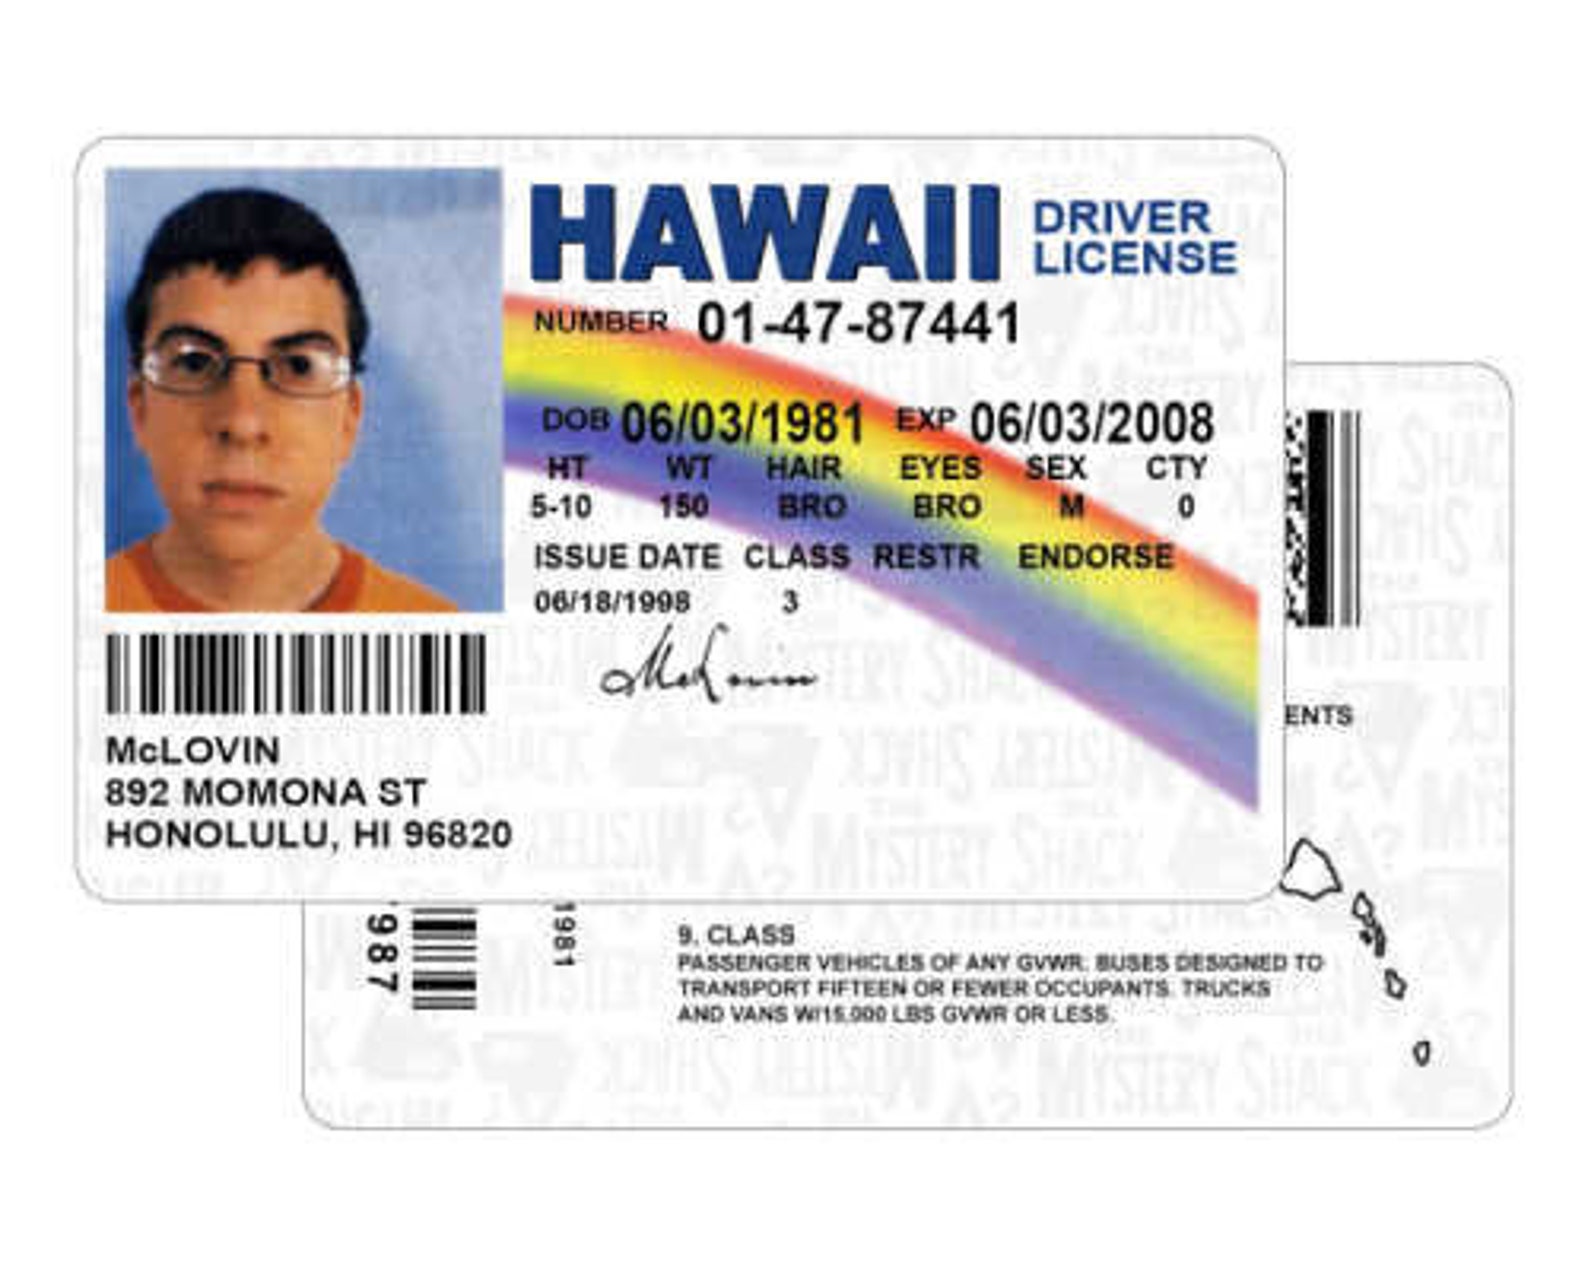 Superbad - McLovin License.